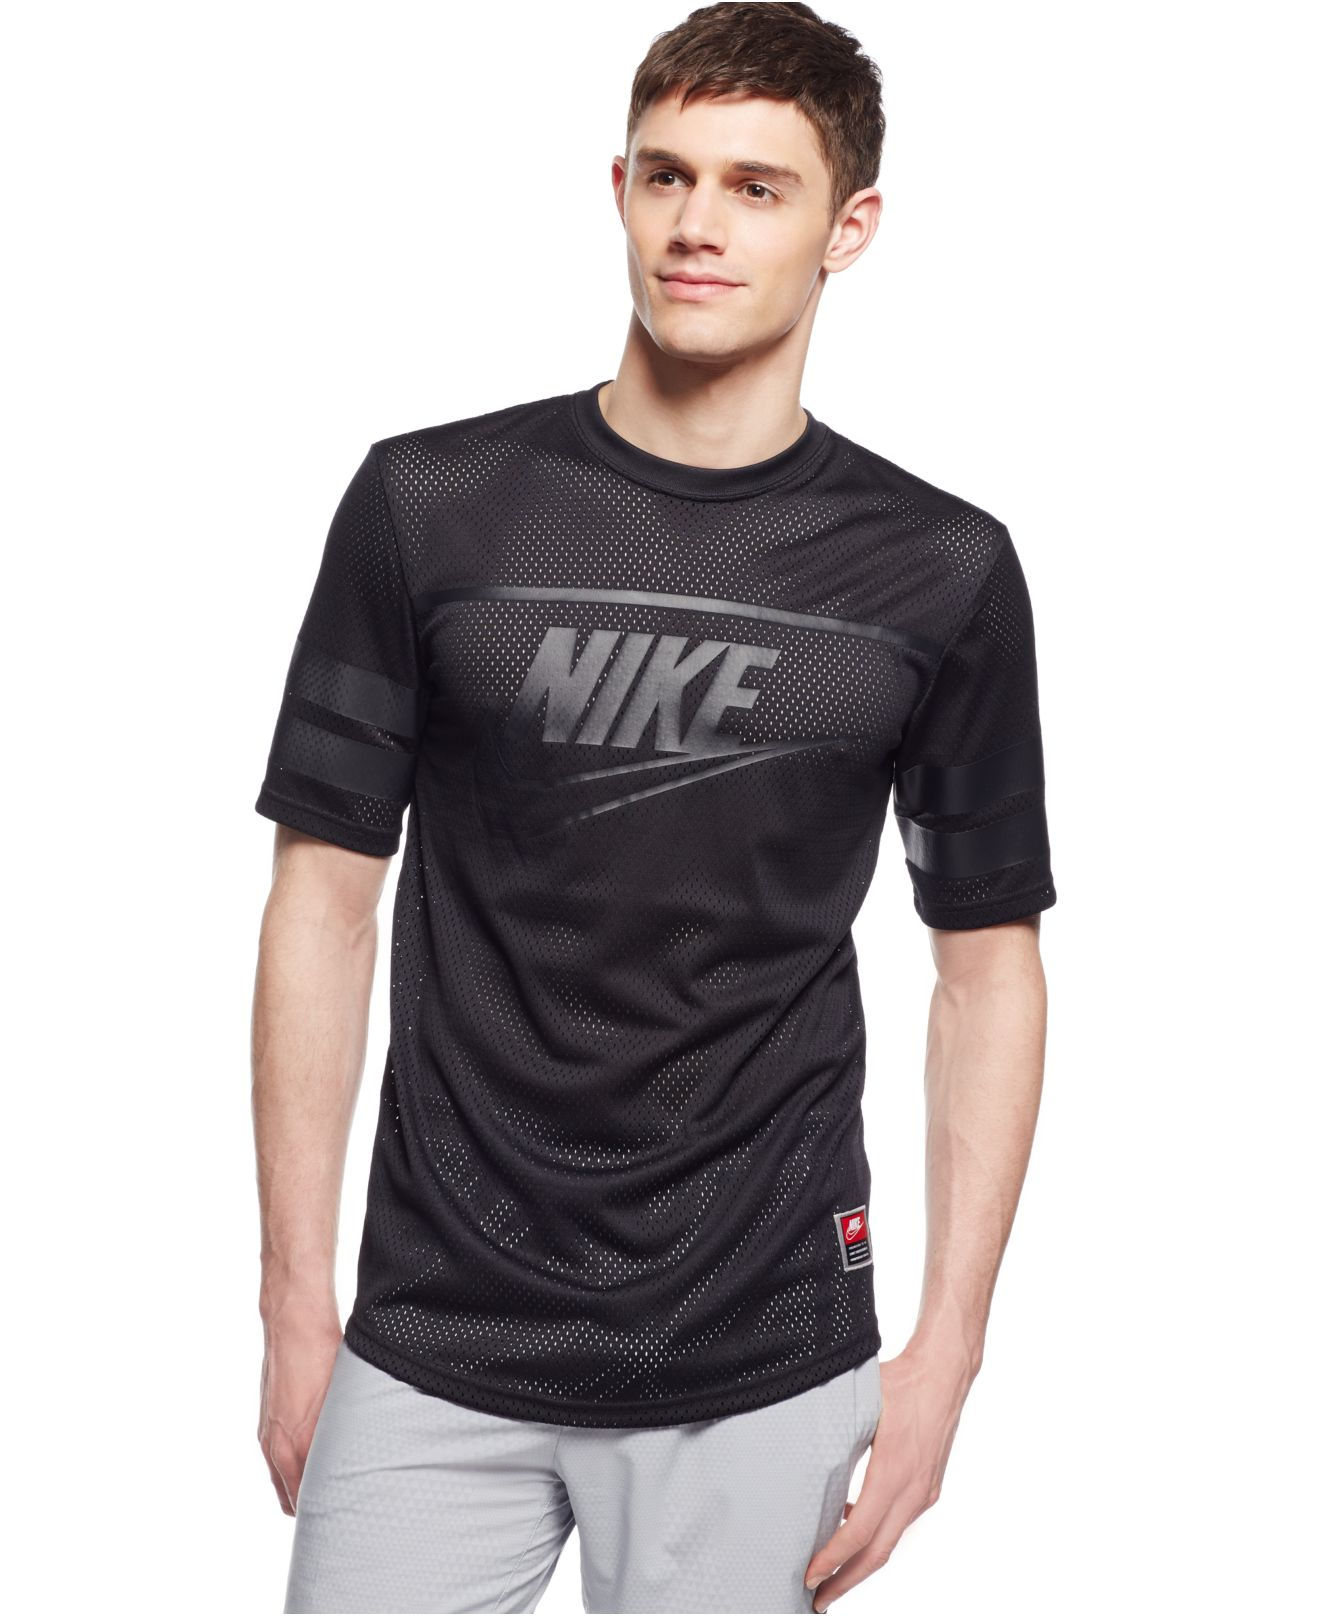 emulsion Swimming pool Leeds Nike Knows Franchise Mesh T-shirt in Black/Black (Black) for Men - Lyst